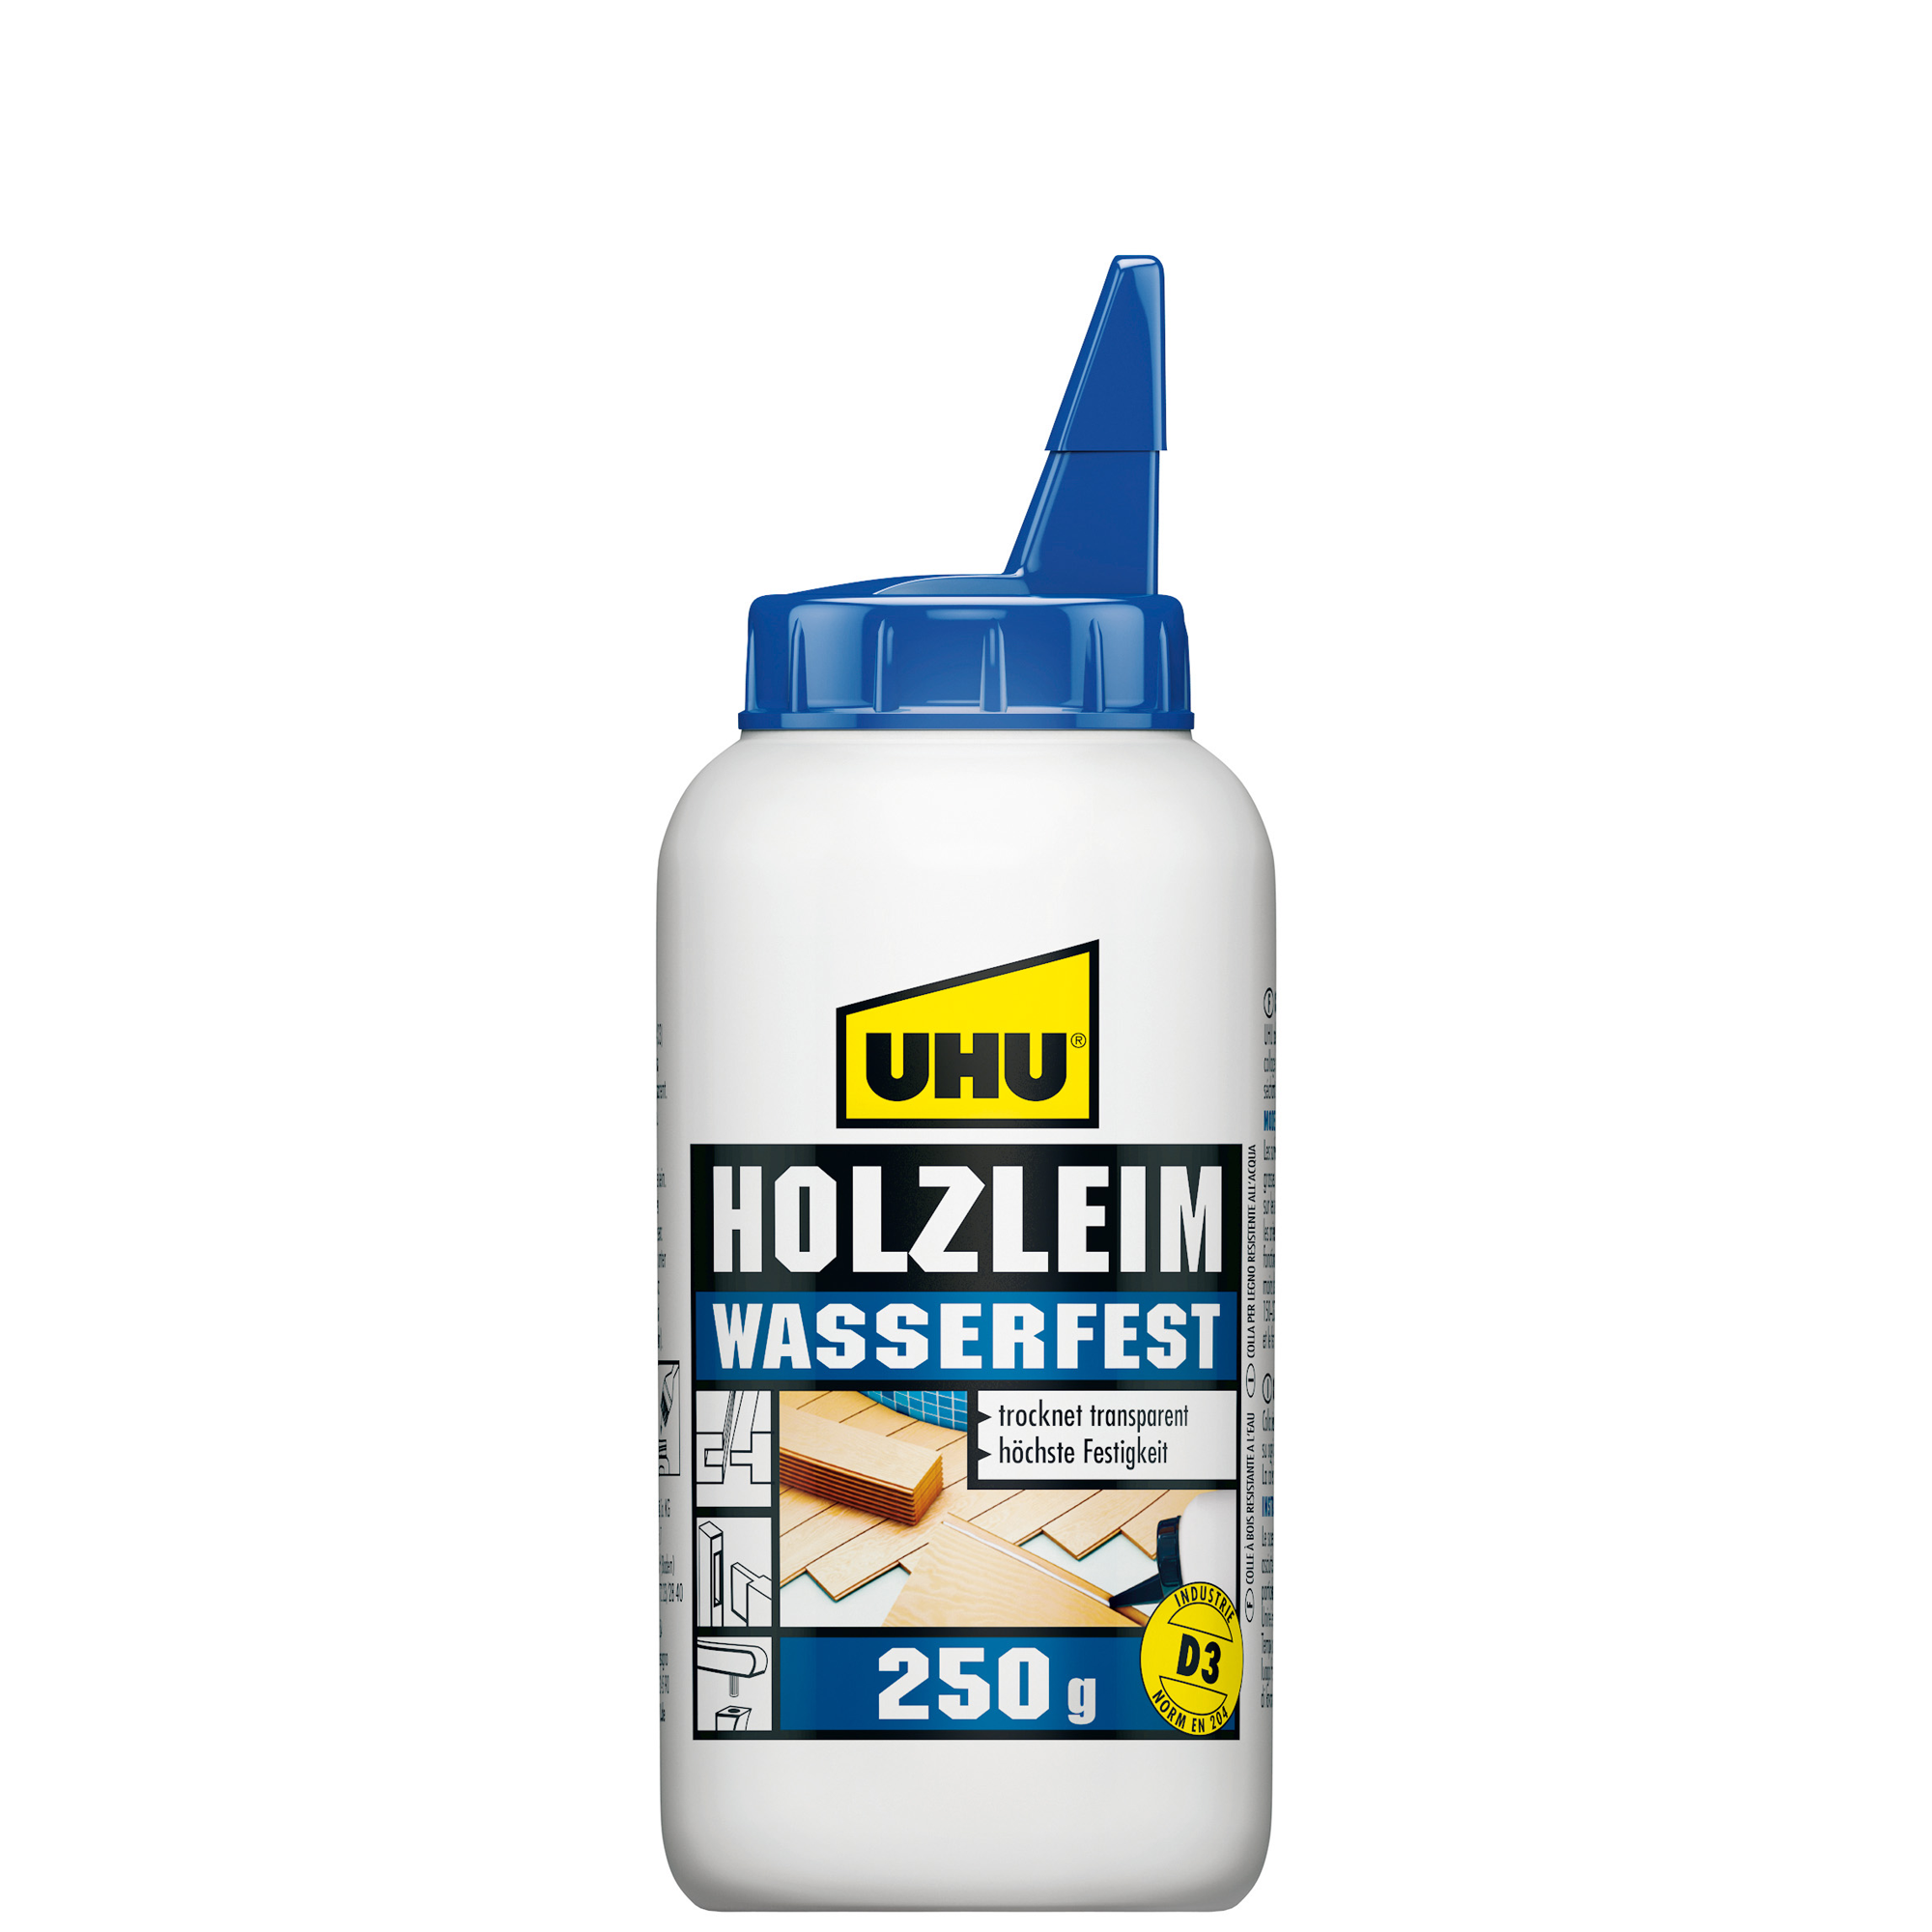 Holzleim 'Wasserfest' 250 g + product picture